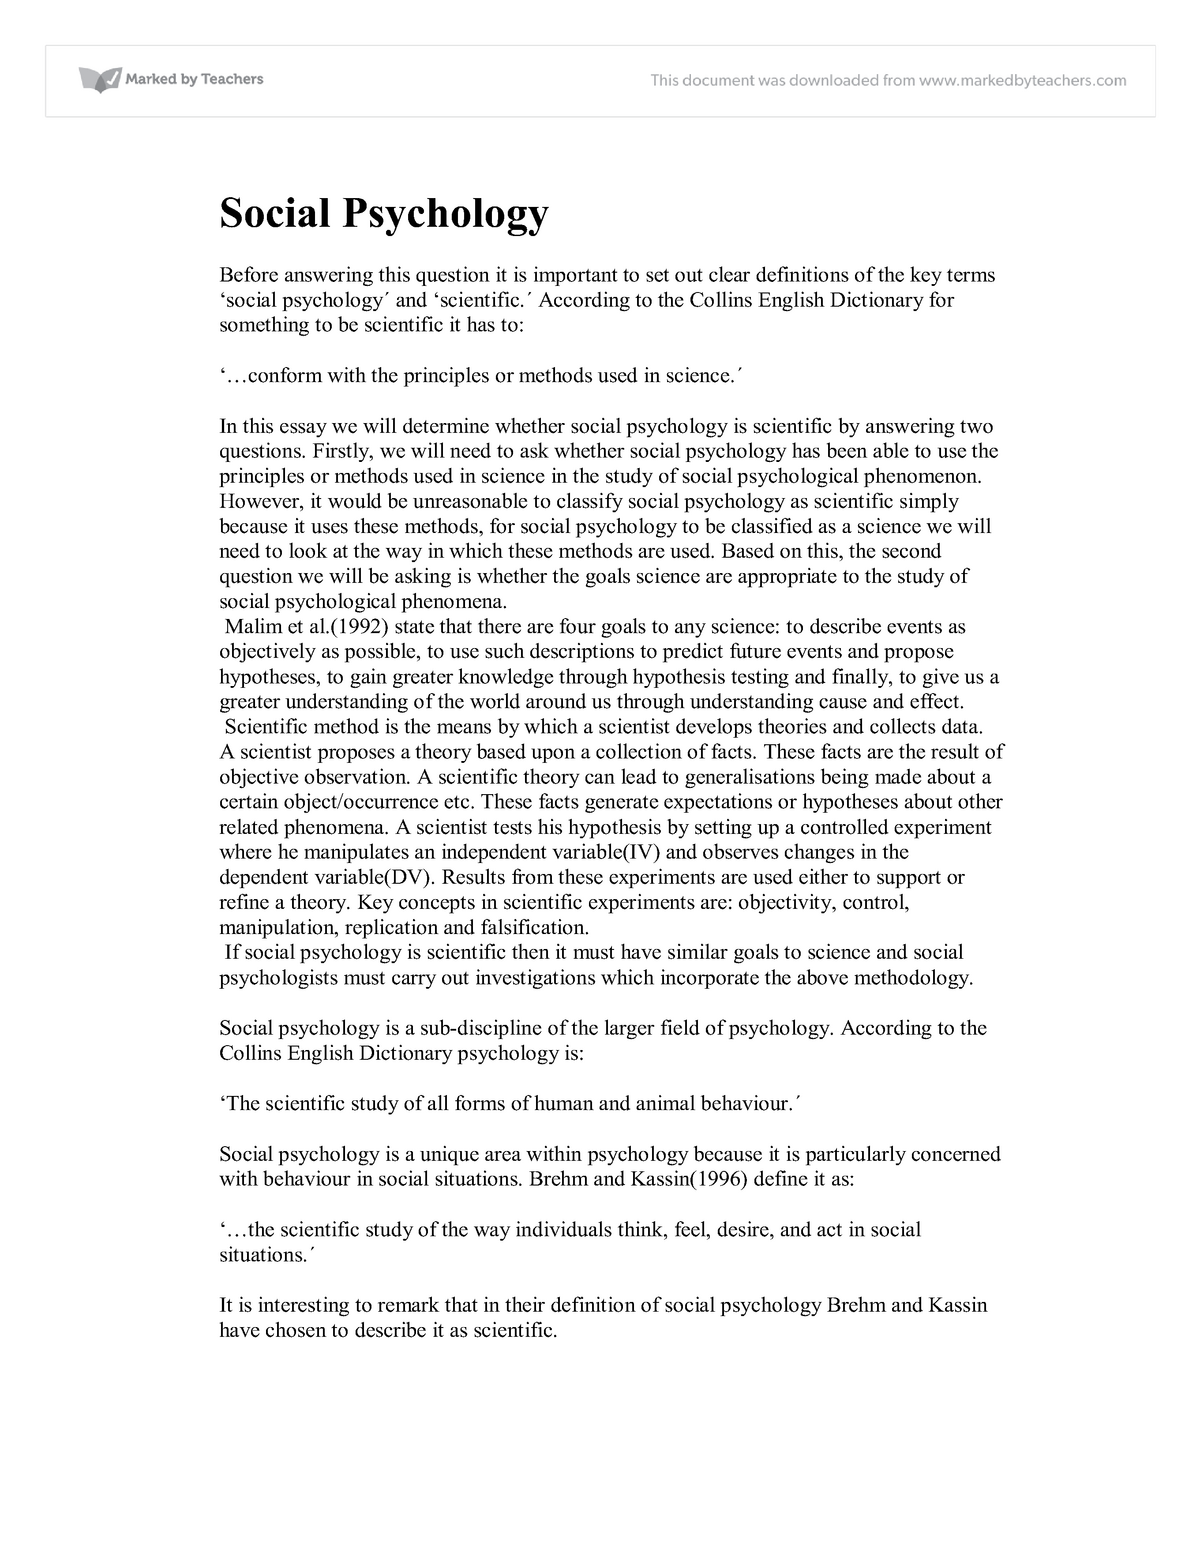 social psychology essay structure